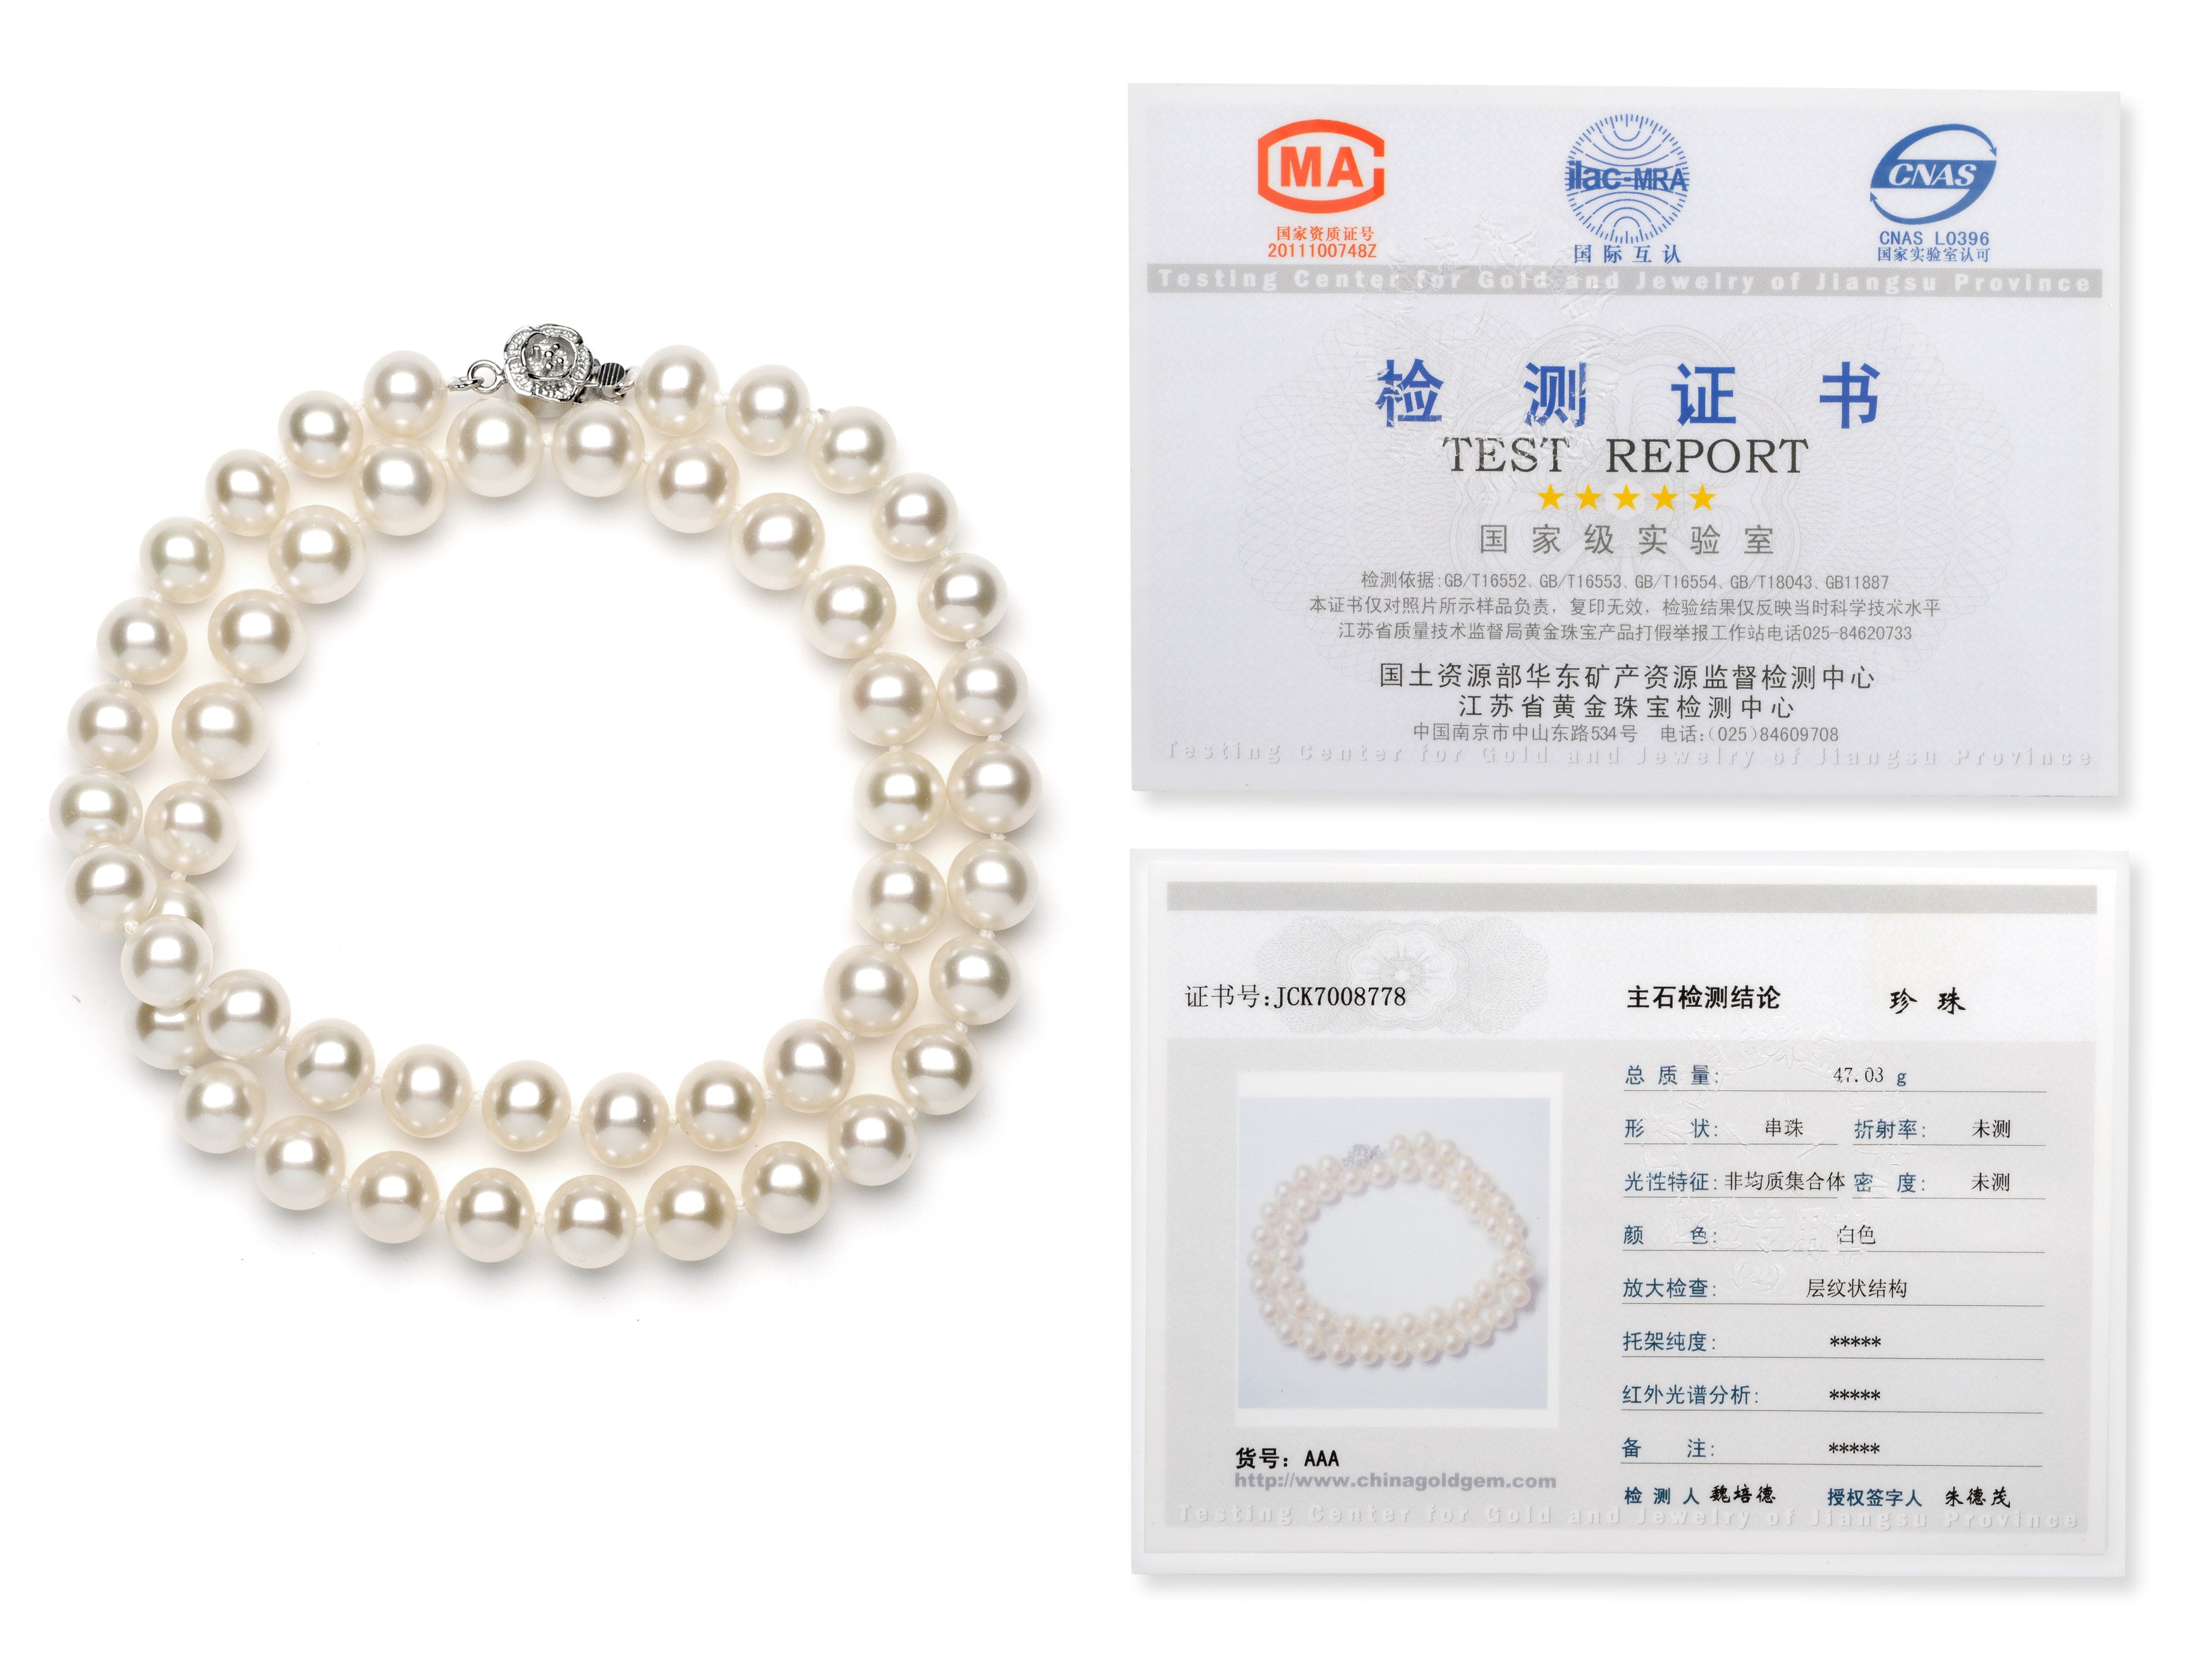 Double Strand Necklace/Bracelet Set 7.0-8.0 mm White Freshwater Pearls